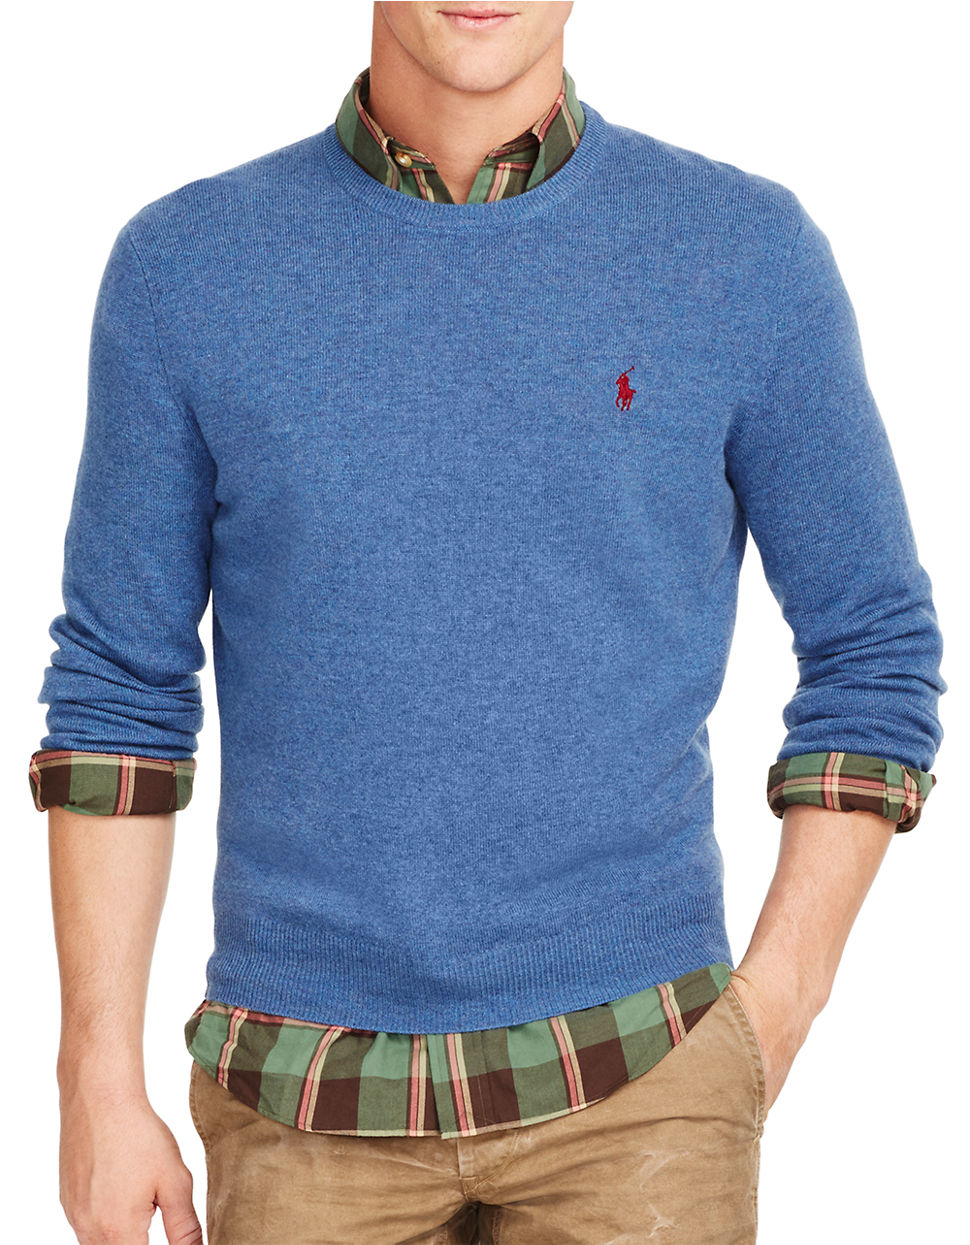 Lyst Polo  Ralph Lauren Merino Crewneck  Sweater in Blue 